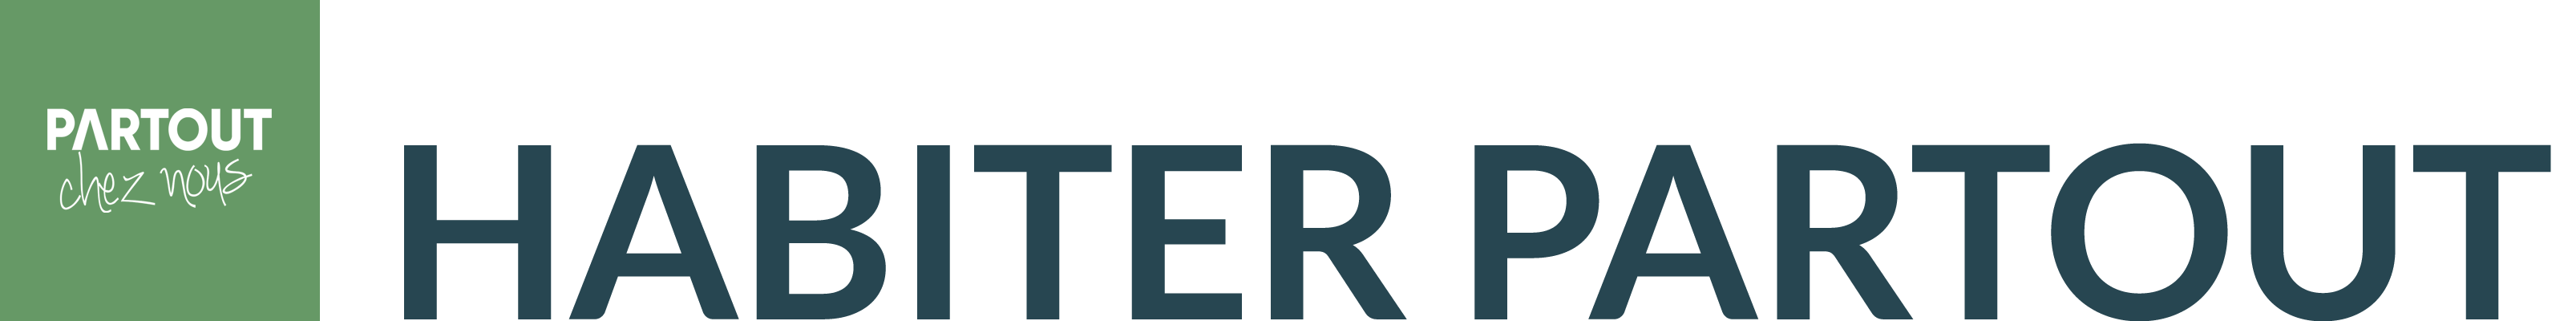 HABITER PARTOUT logo